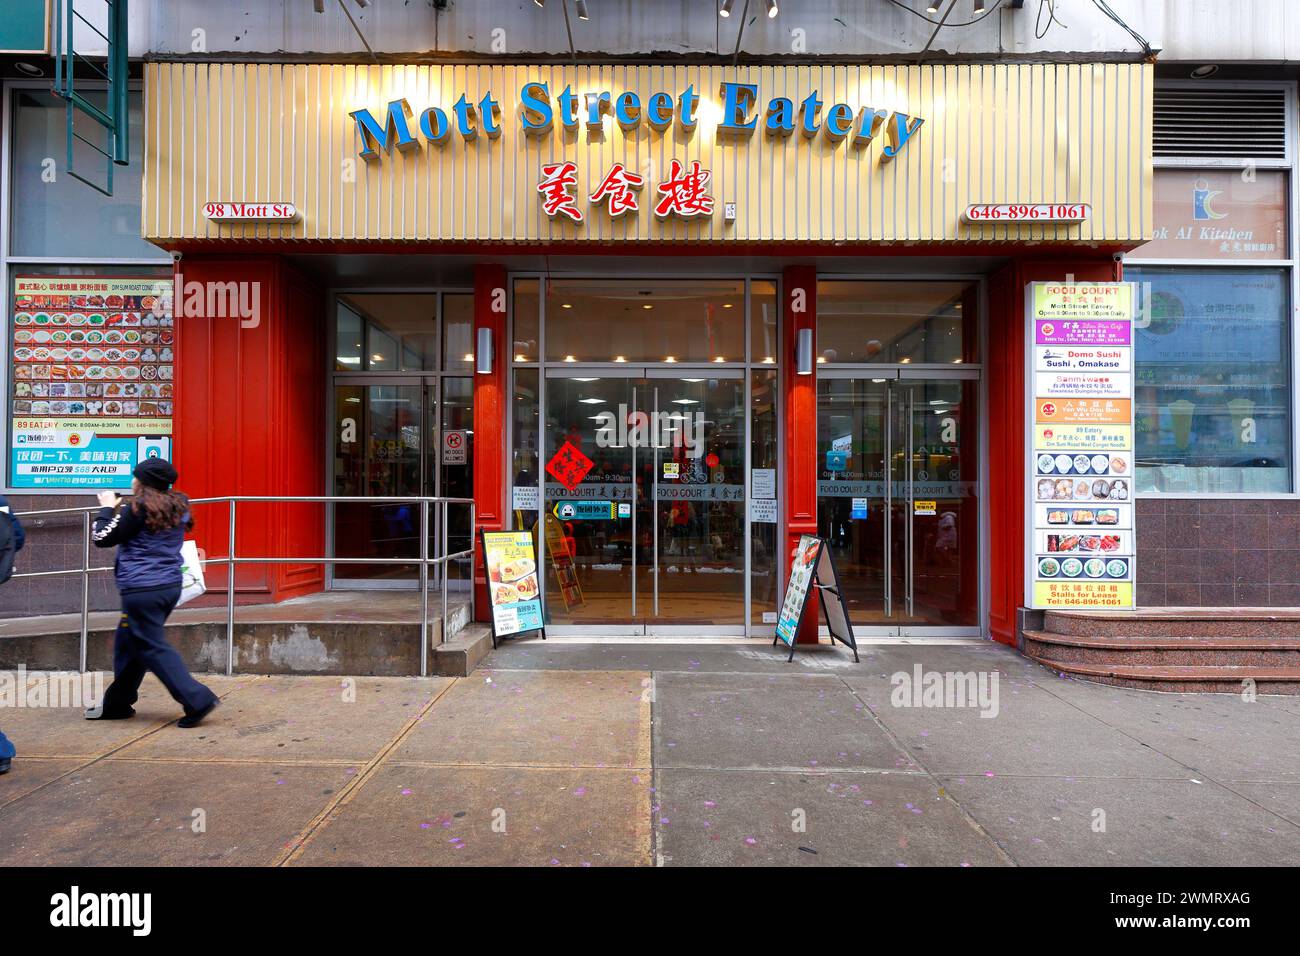 Mott Street Eatery, 98 Mott St, New York, NYC storefront photo of a food court in Manhattan Chinatown. Stock Photo